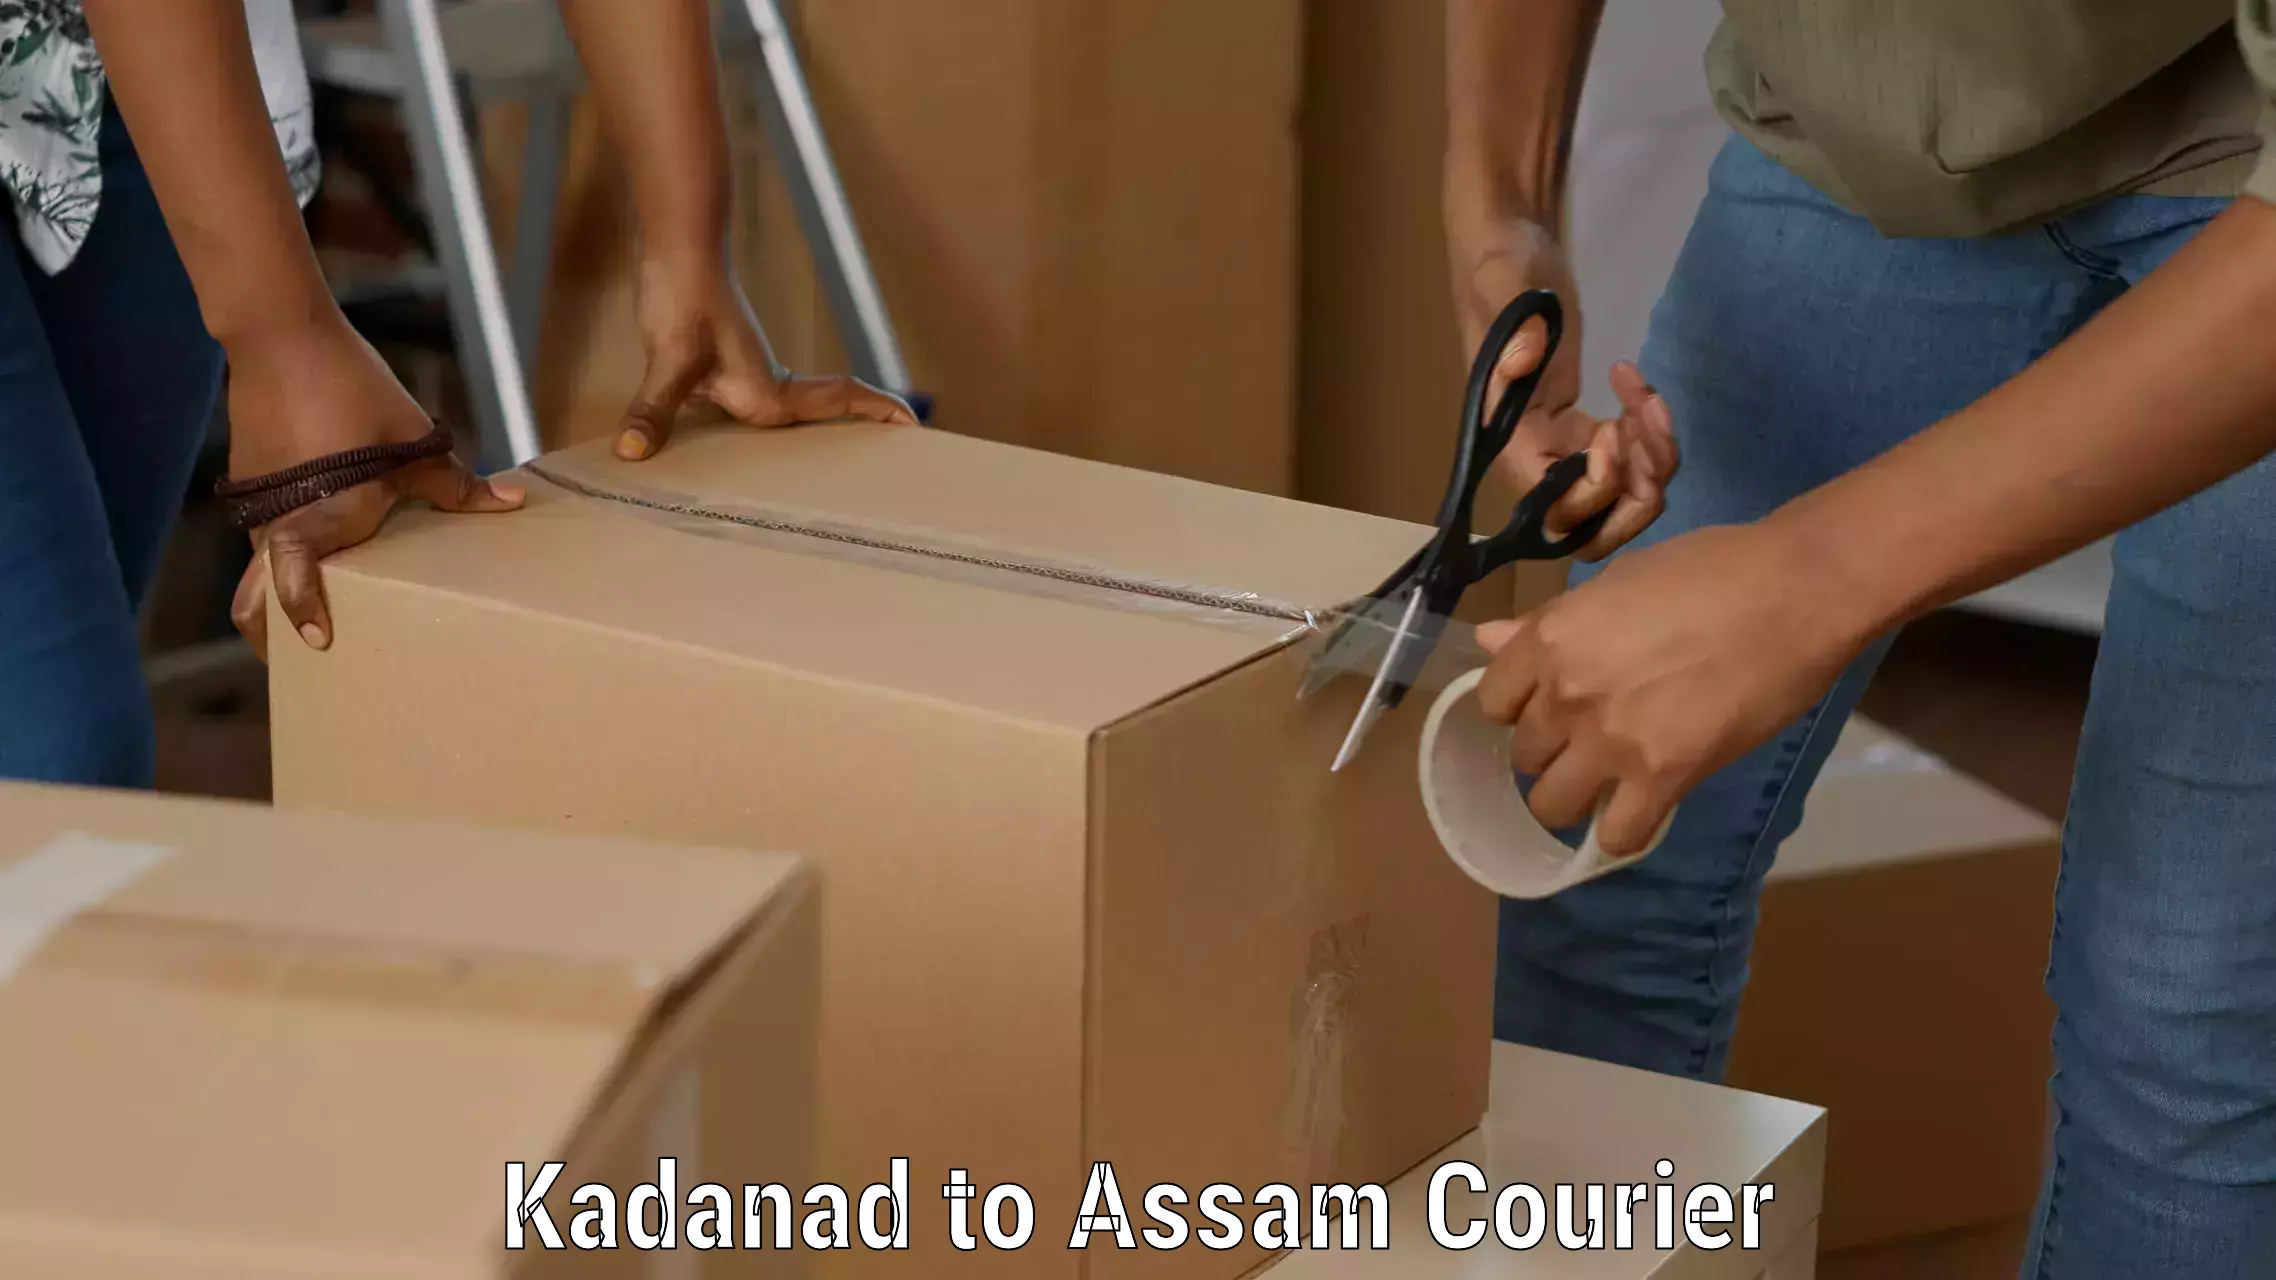 Courier service partnerships Kadanad to Pathsala